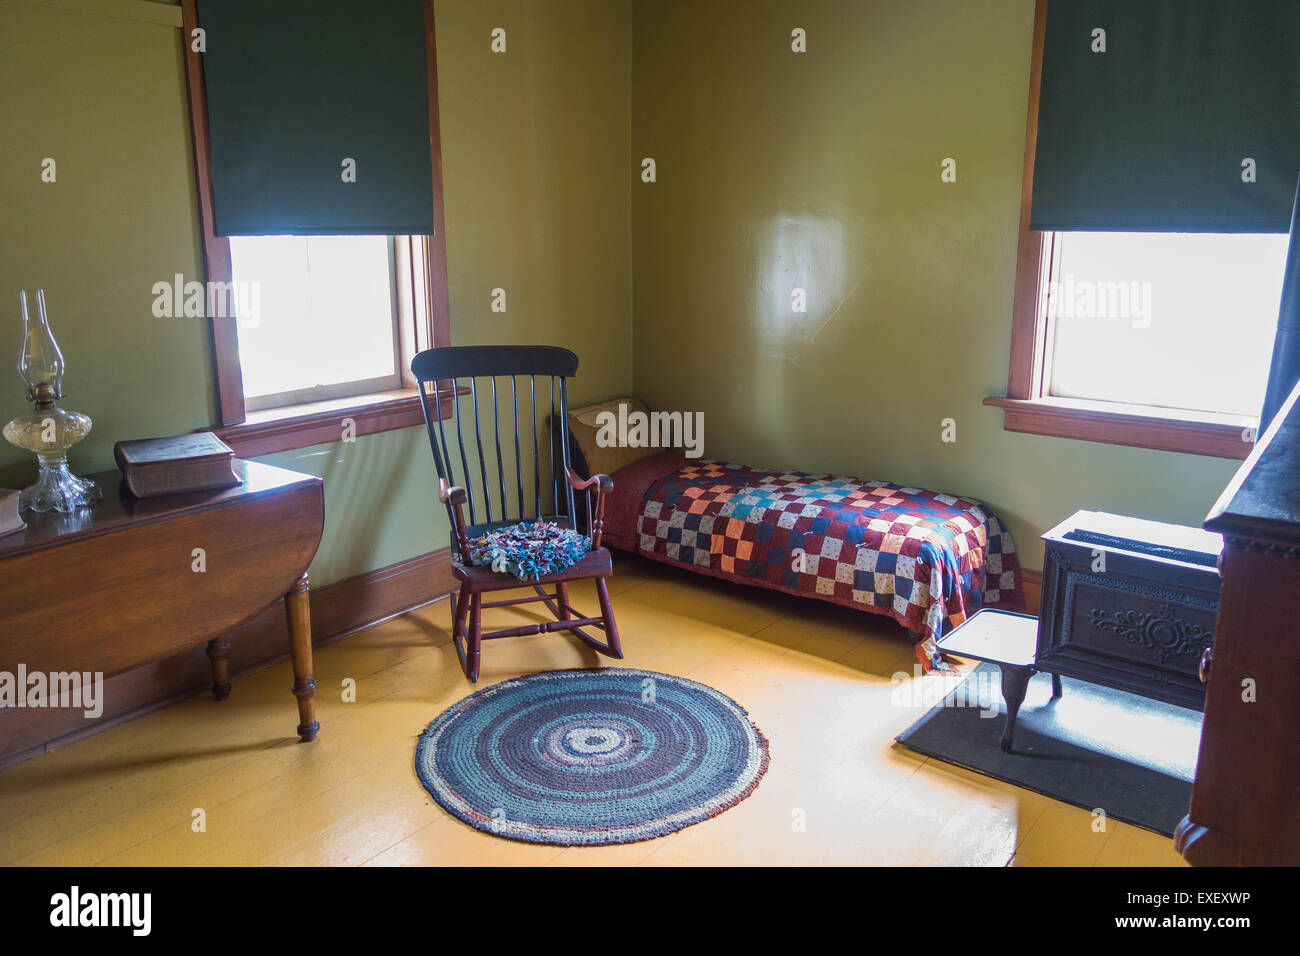 Mennonite house interior napping bed Stock Photo